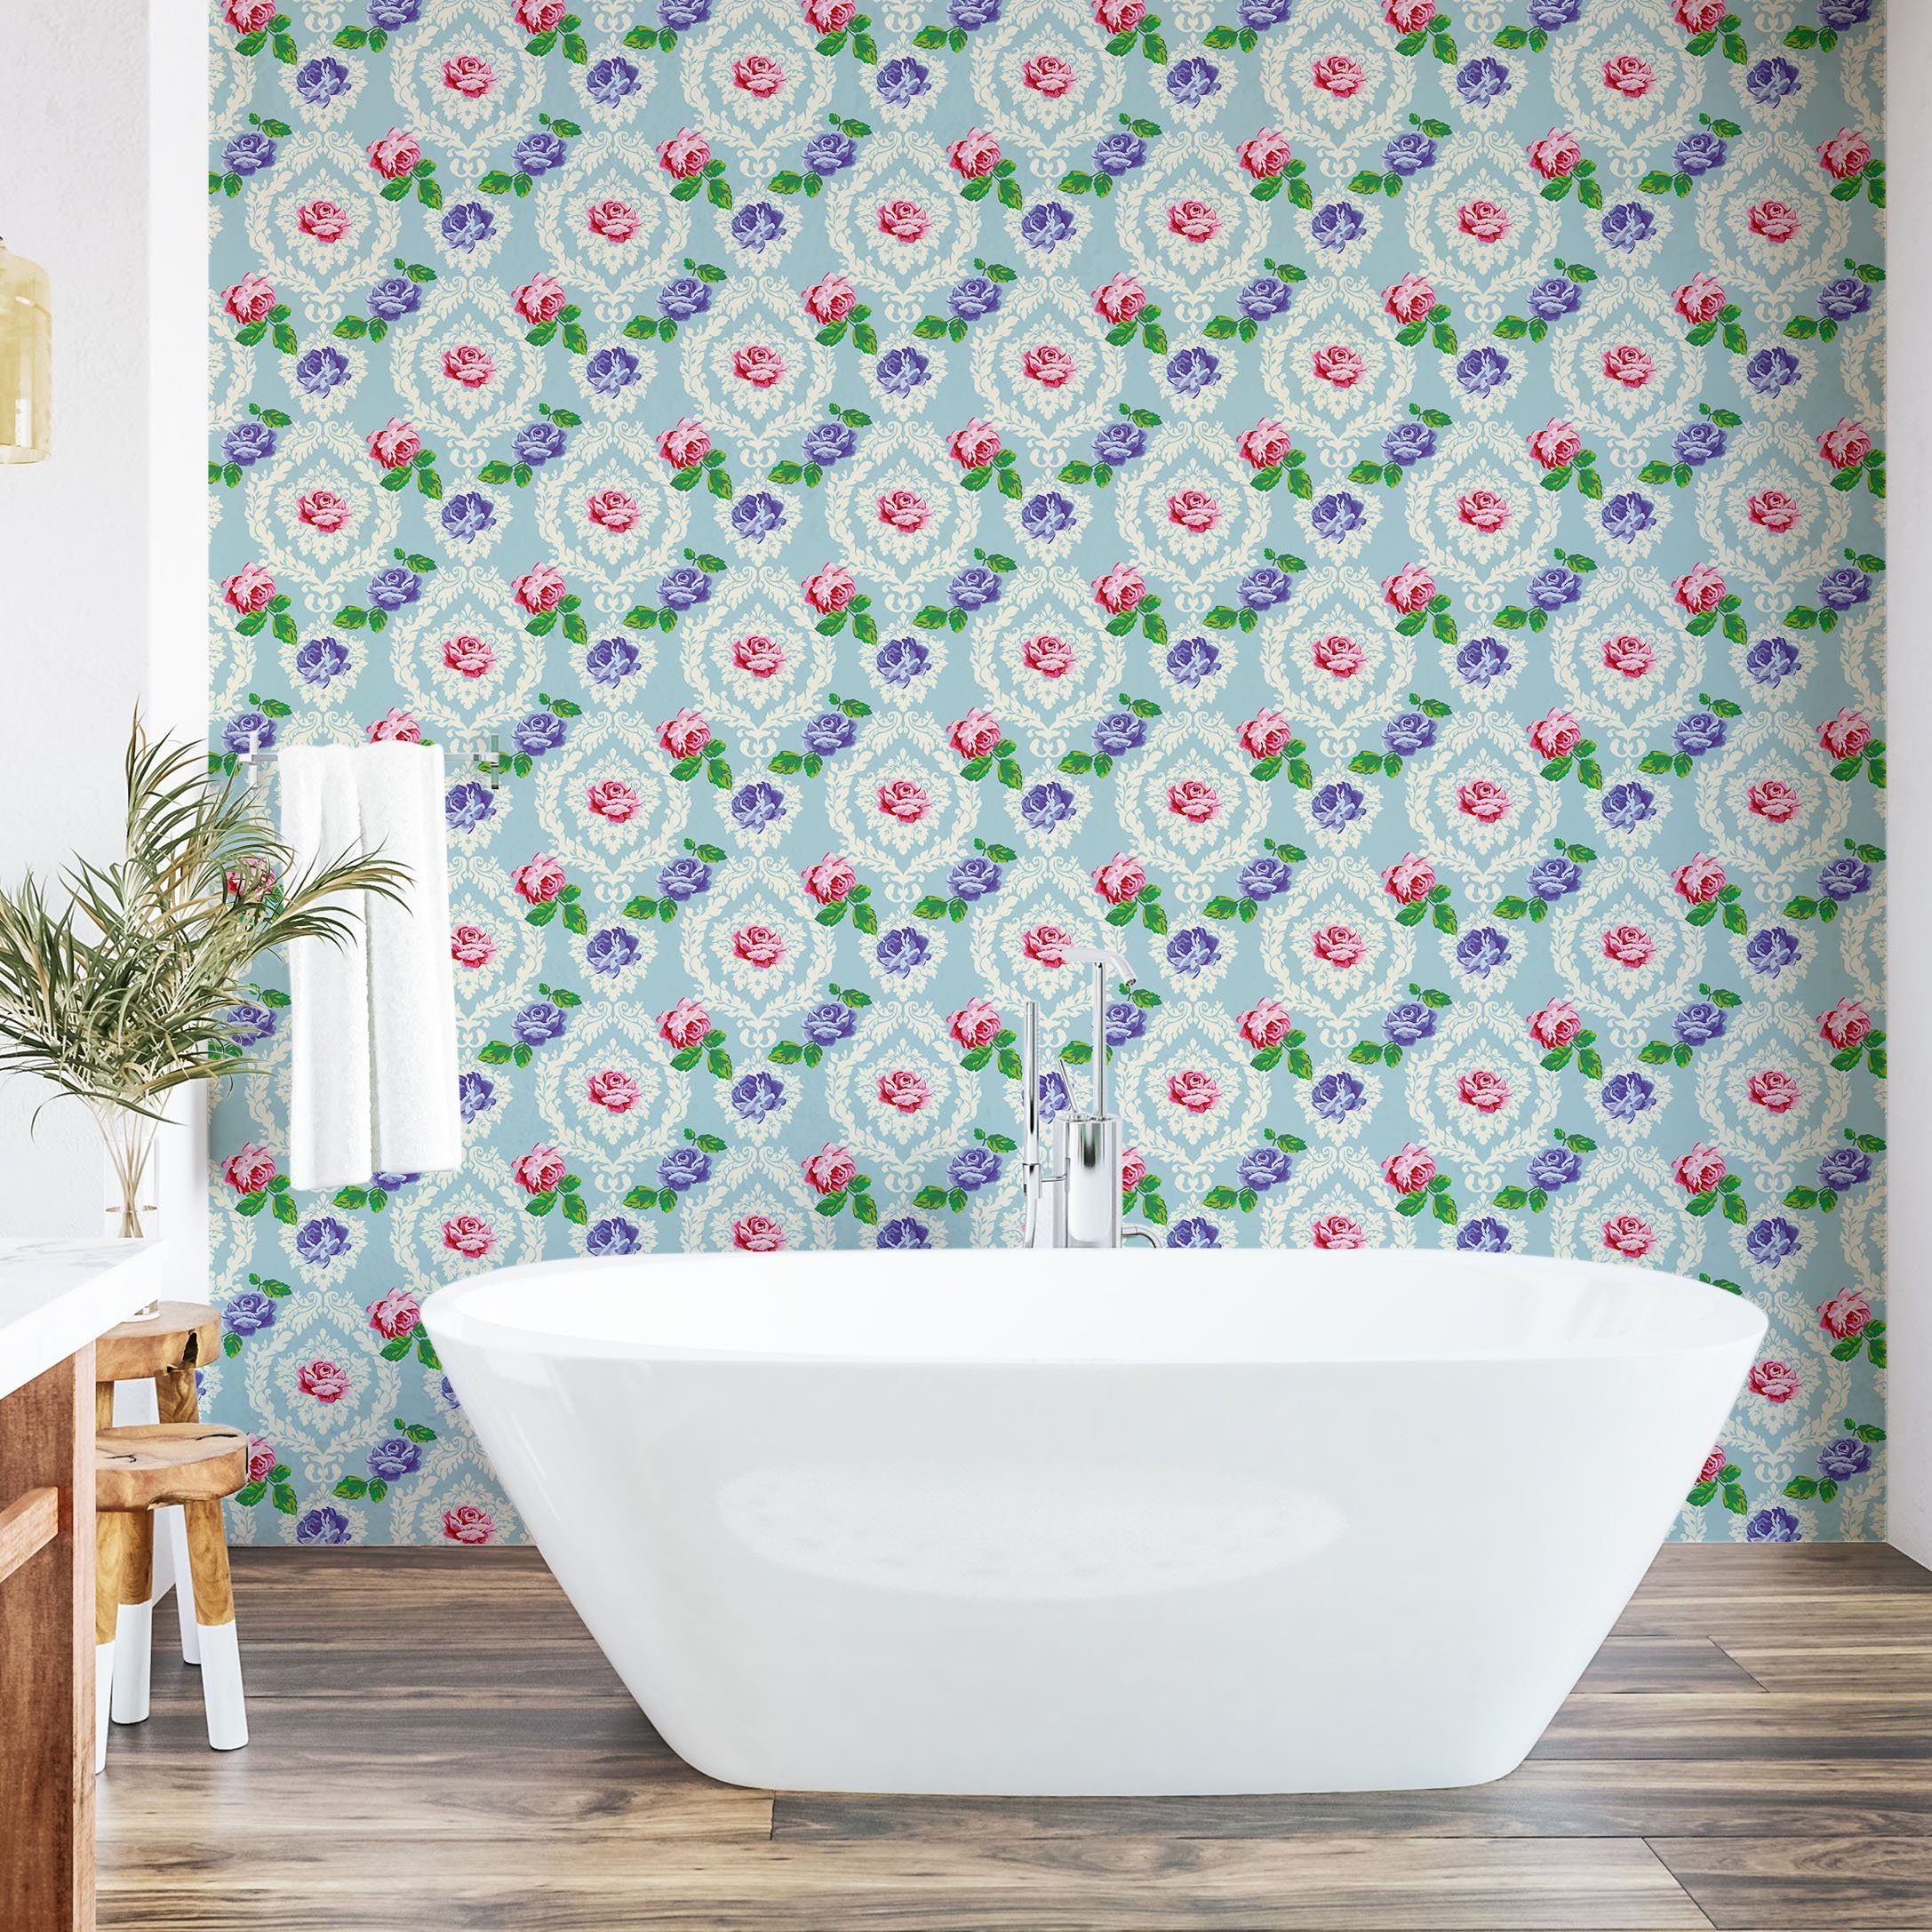 Abakuhaus Vinyltapete selbstklebendes Rosen Floral farbige Küchenakzent, Wohnzimmer Barock